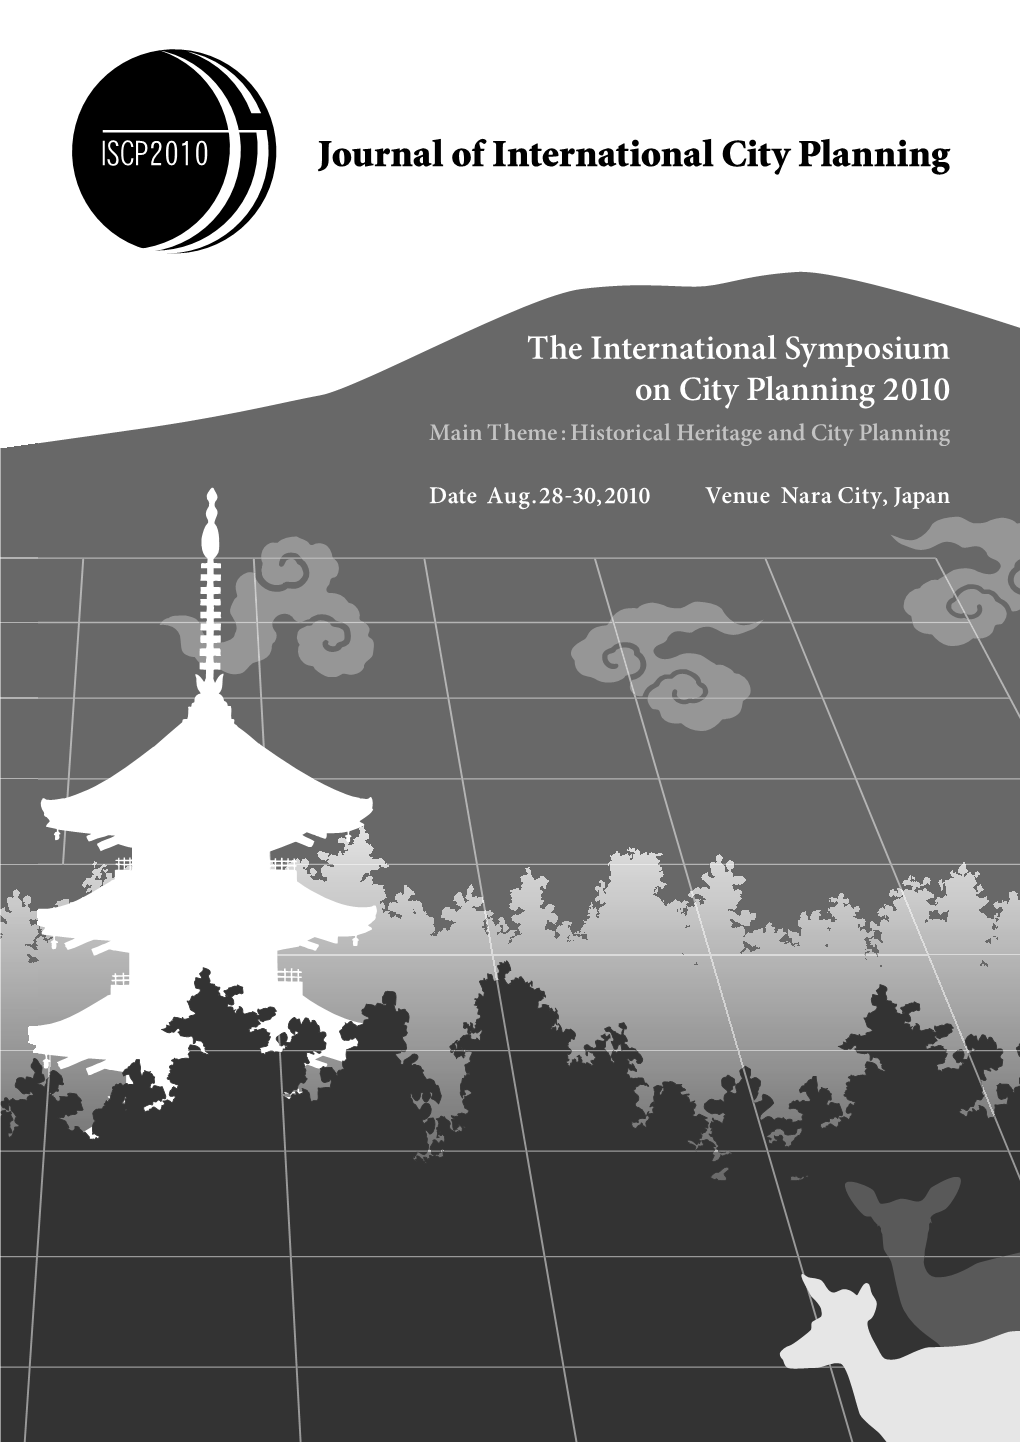 Journal of International City Planning Journal of International City Planning